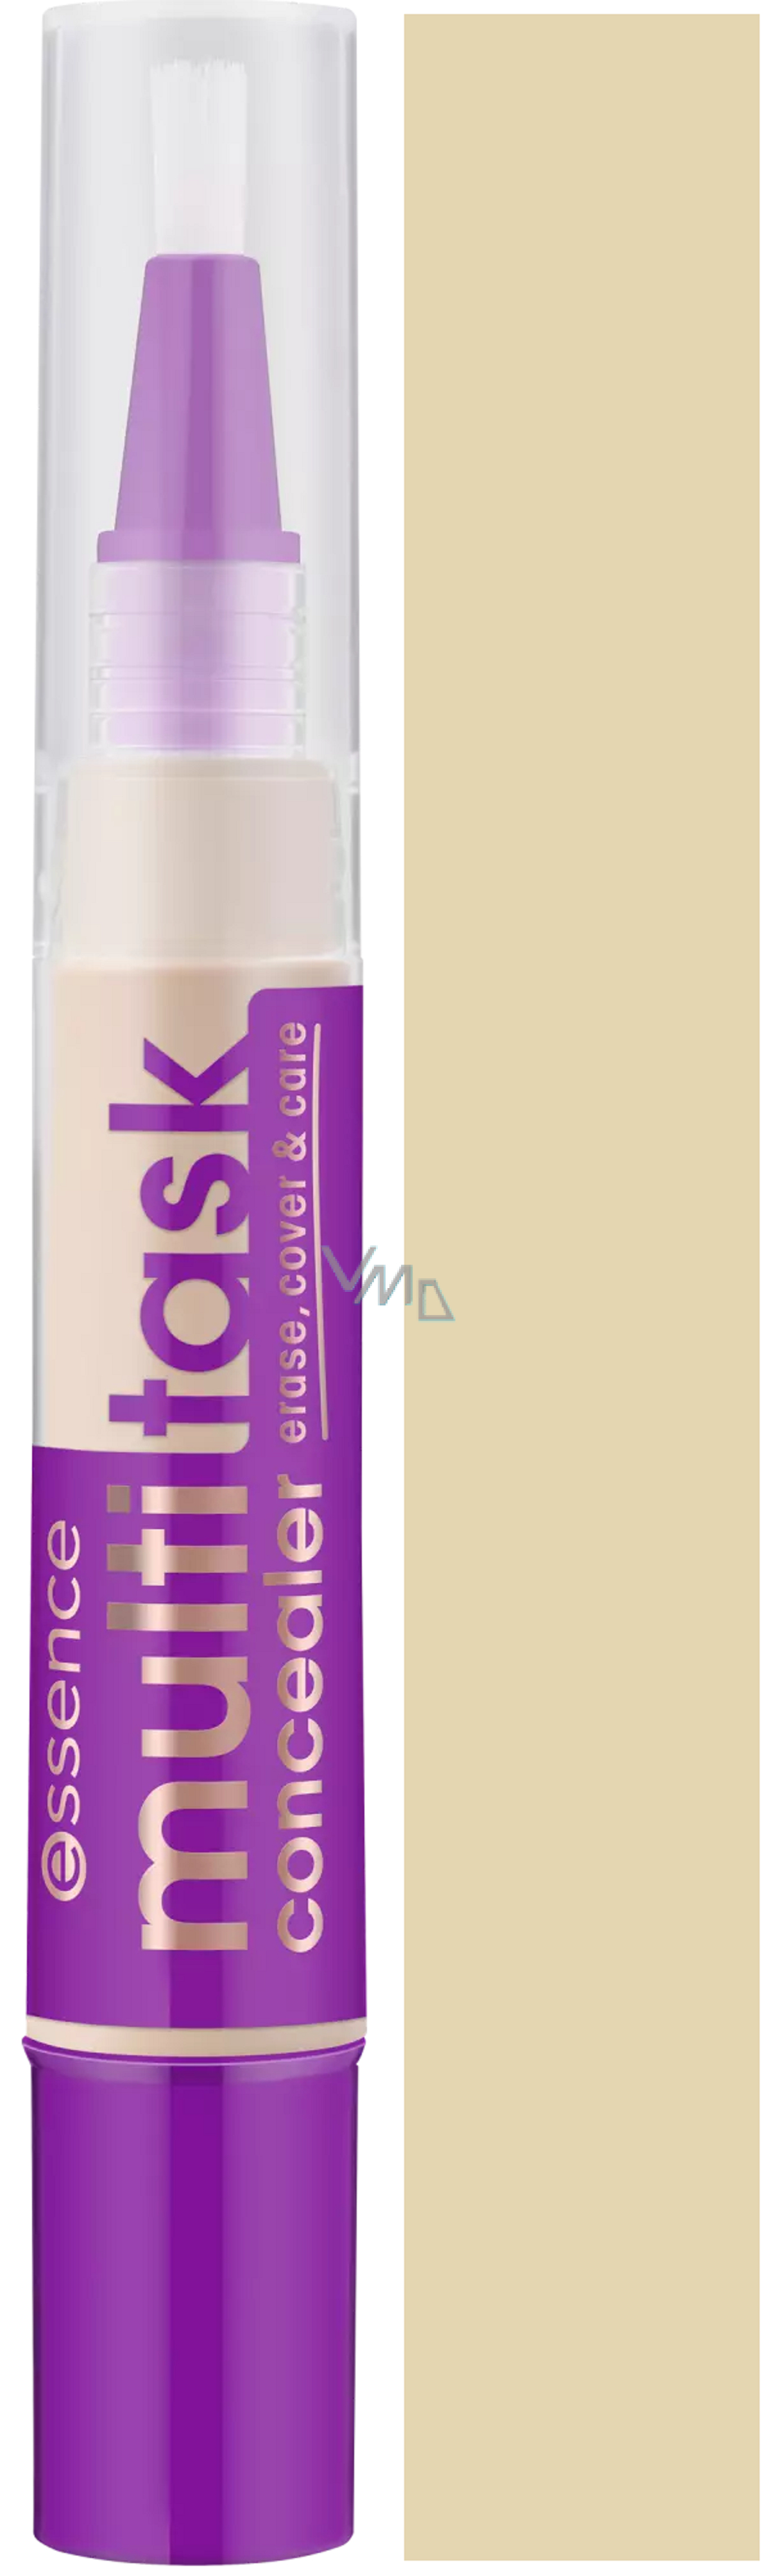 Essence Multitask Liquid parfumerie 3 Concealer drogerie Natural Nude 15 - VMD ml 